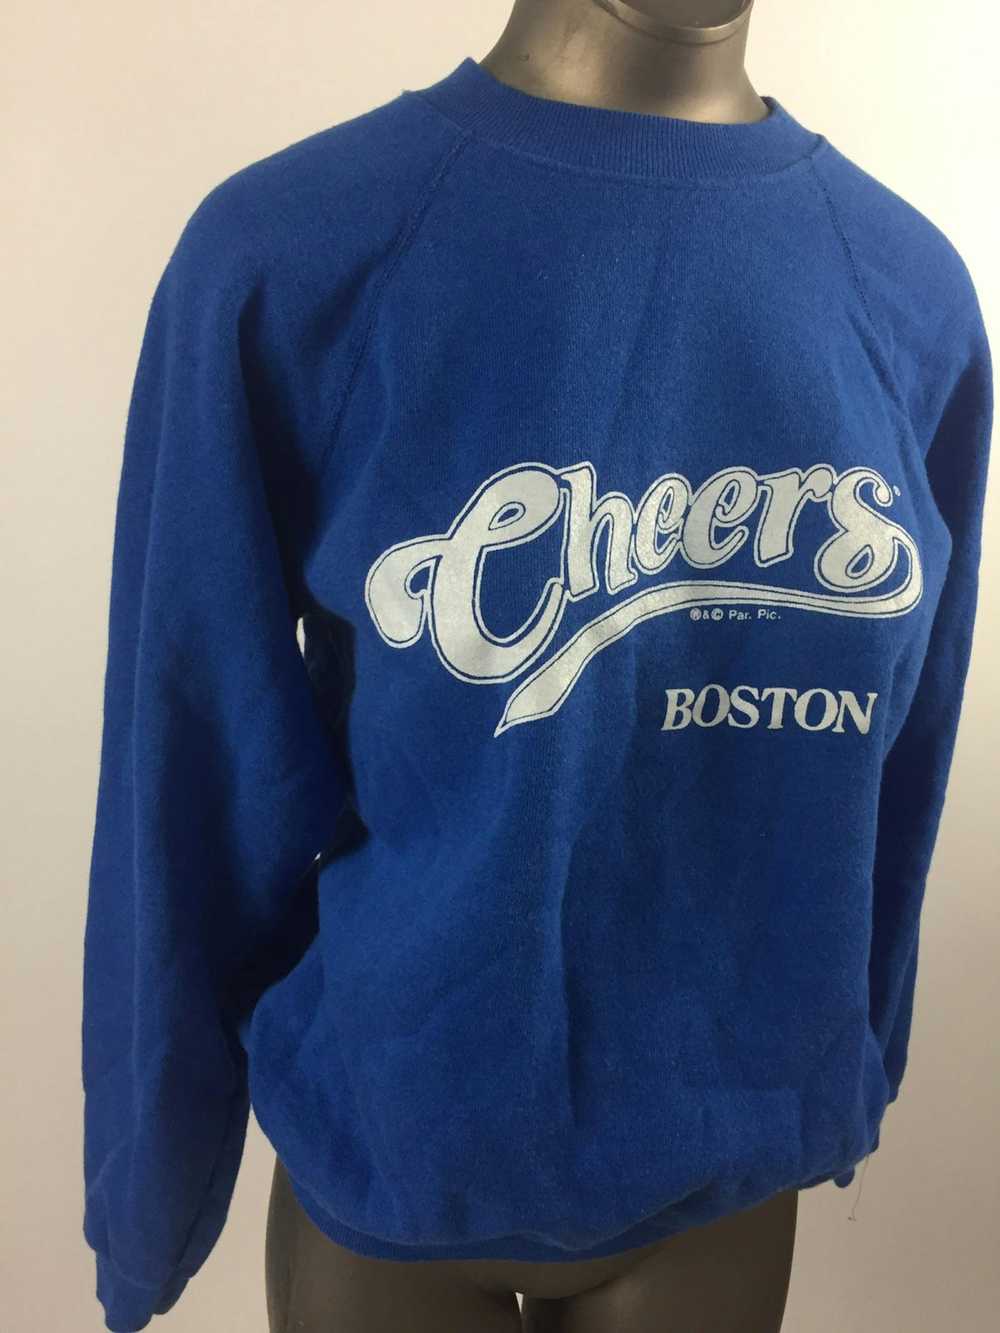 Hanes Vintage Hanes Cheers Boston Sweater - image 4